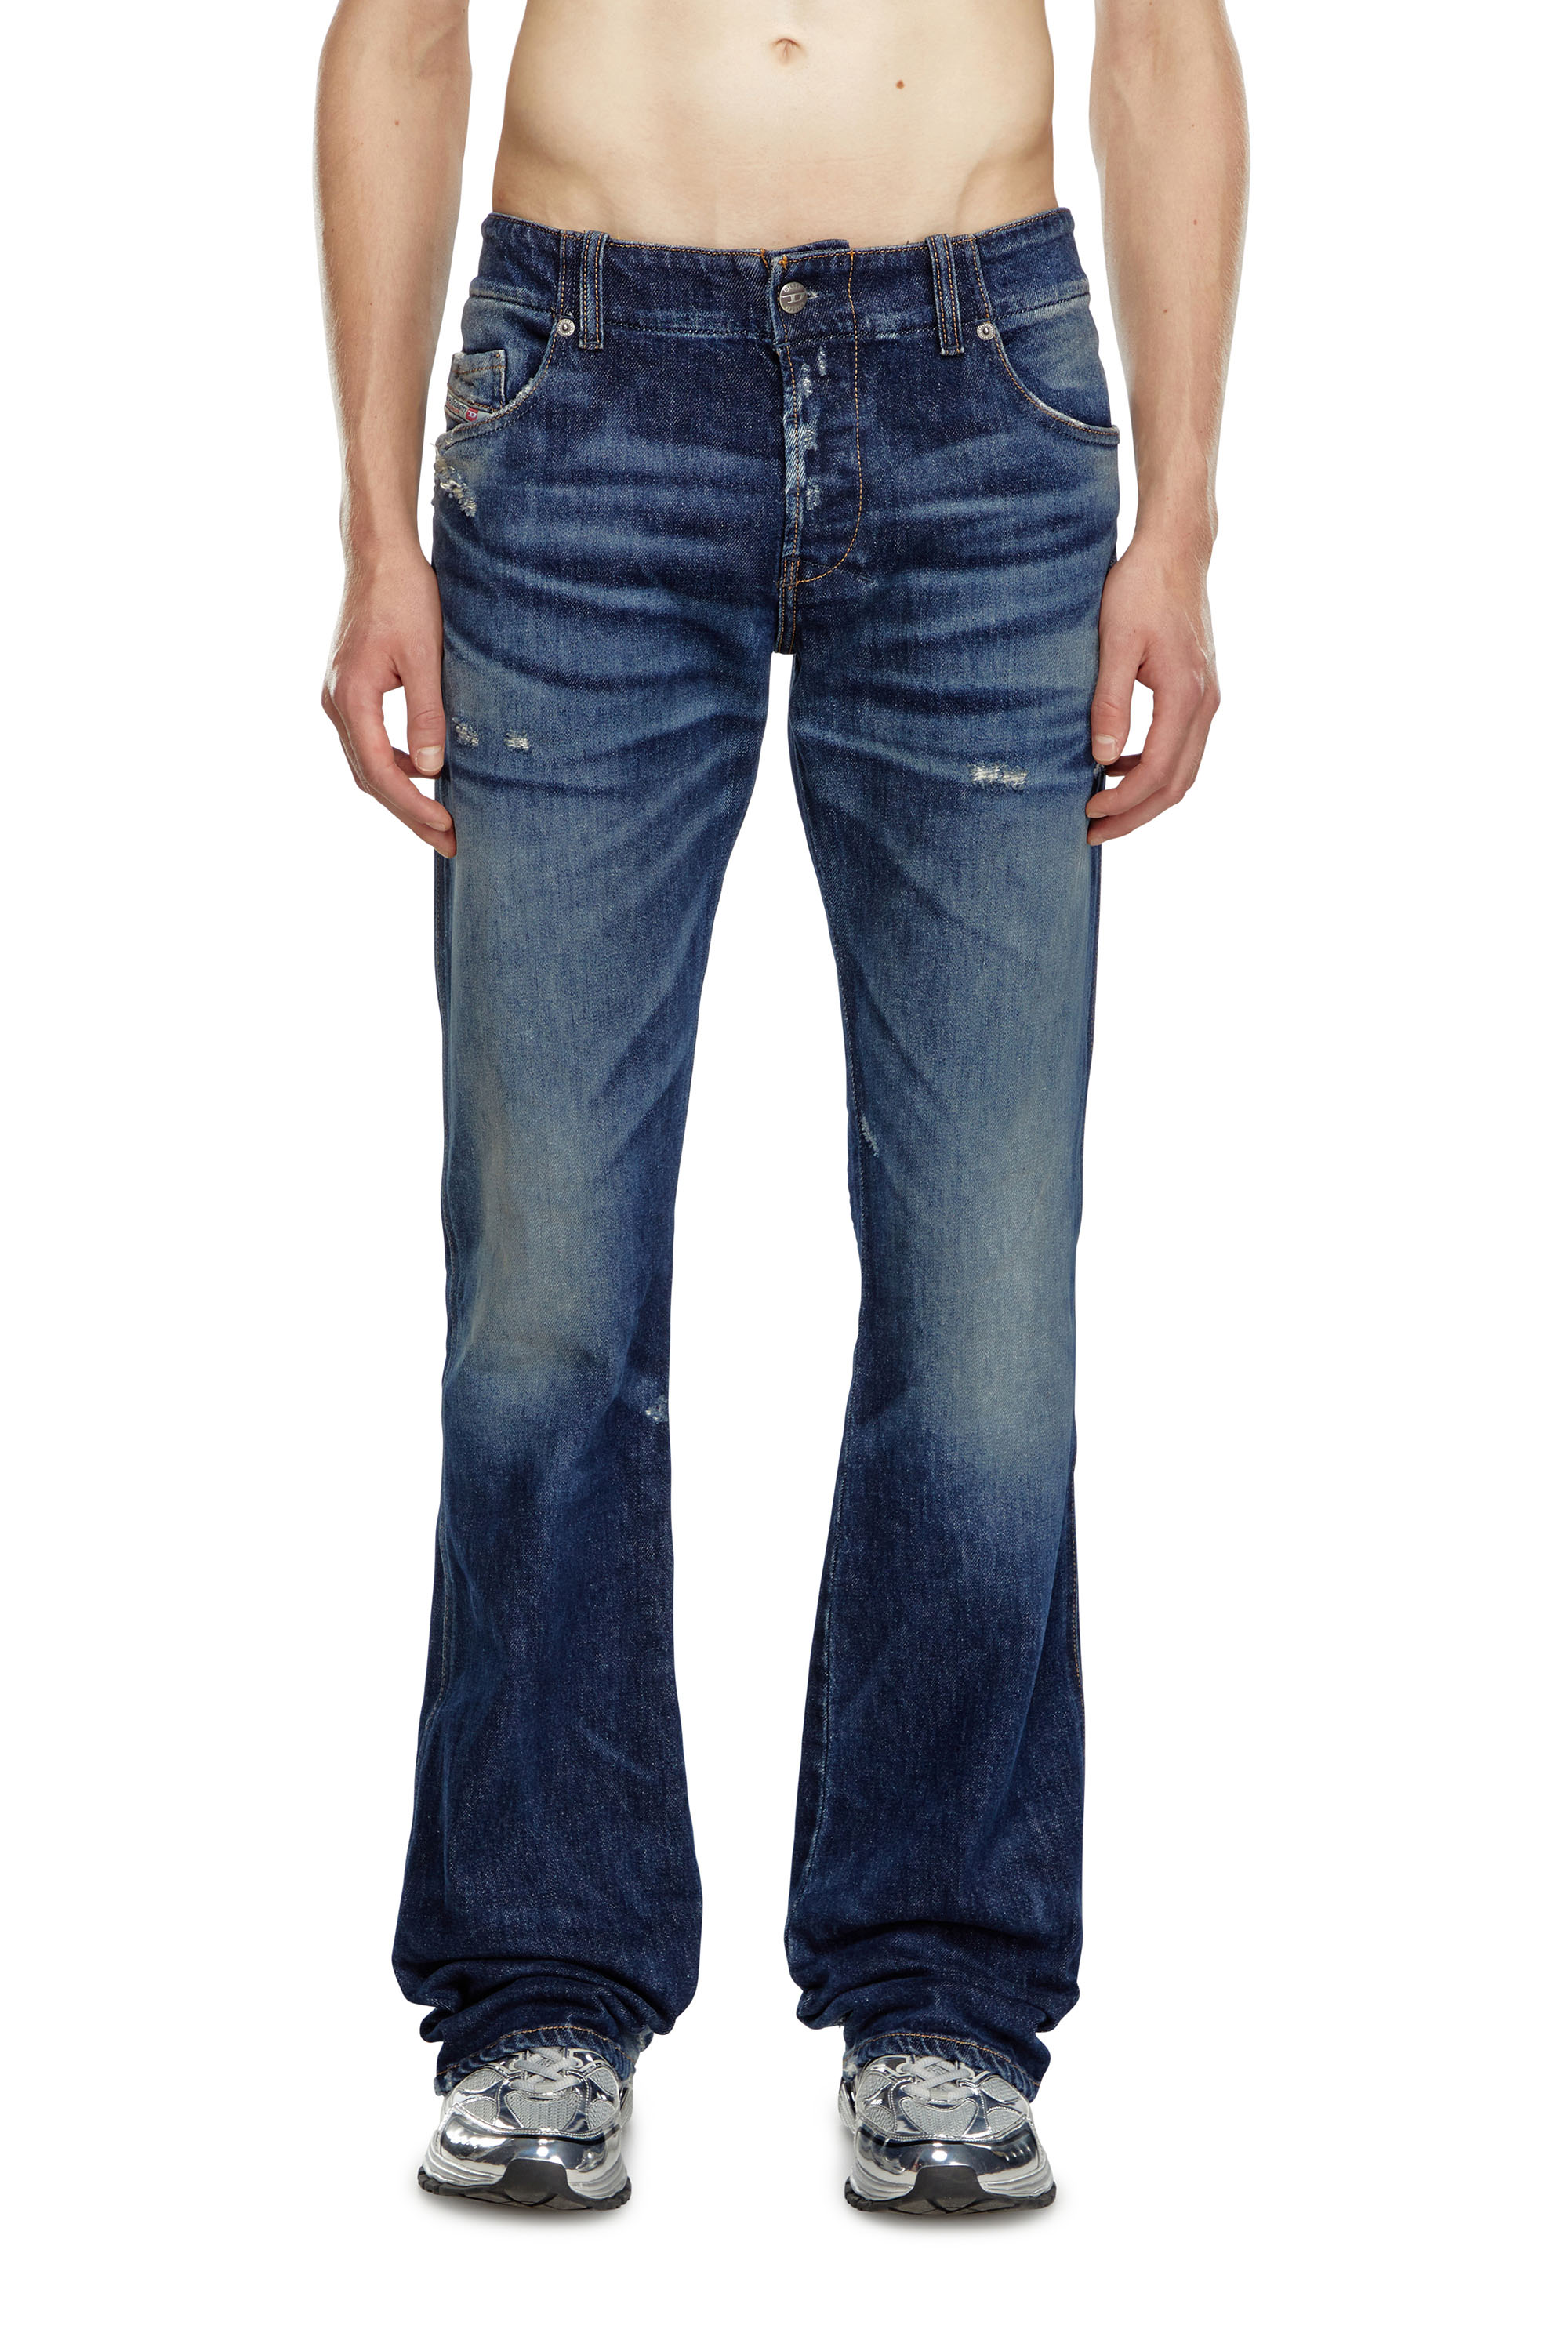 Diesel - Bootcut Jeans D-Backler 09J56, Hombre Bootcut Jeans - D-Backler in Azul marino - Image 1